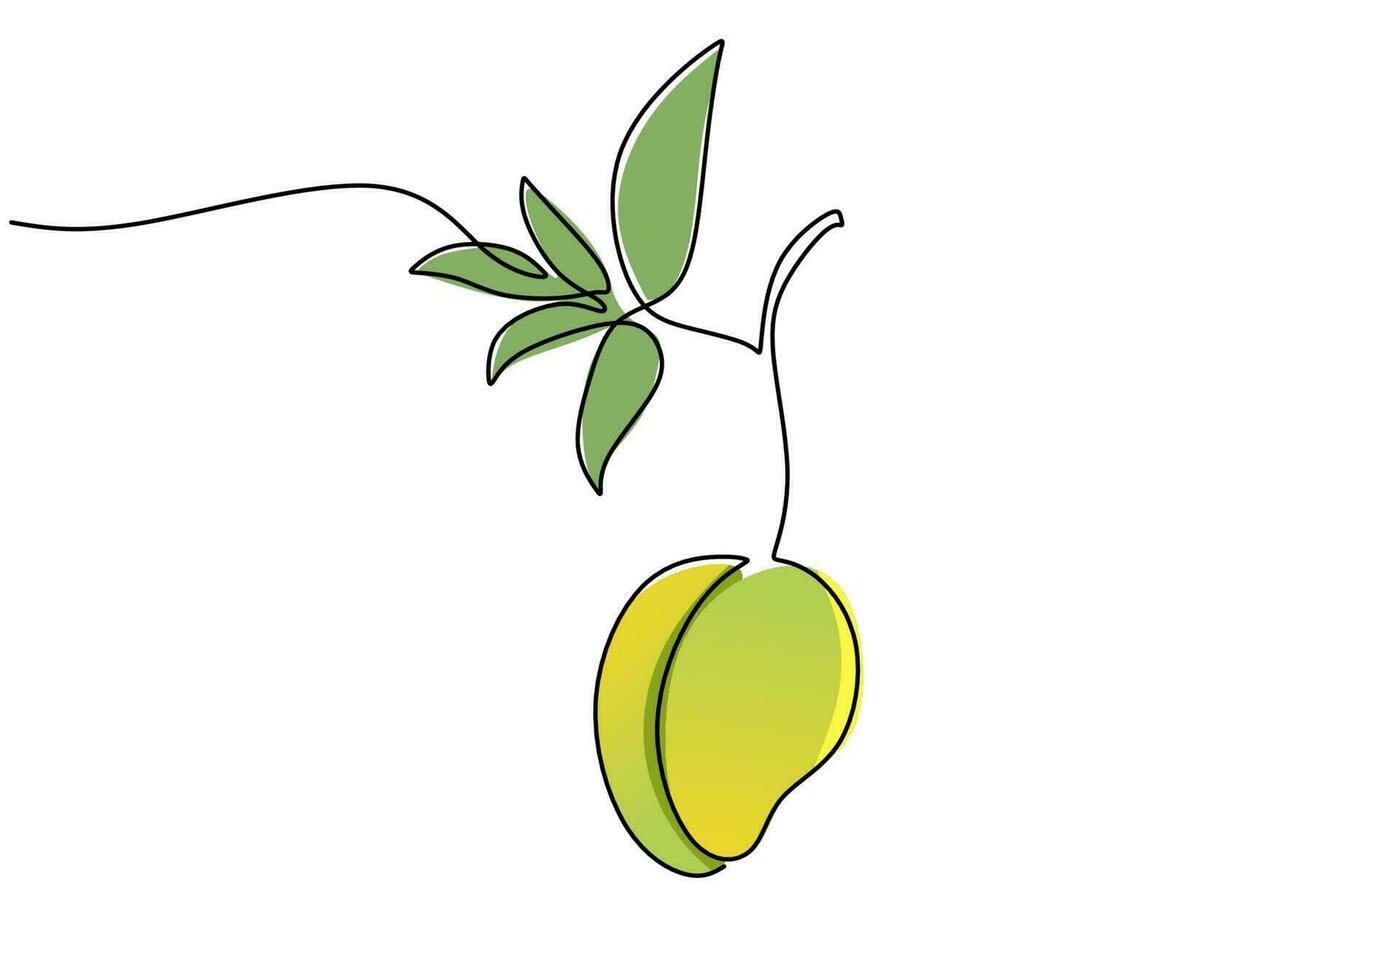 mango kontinuerlig ett linje teckning, frukt vektor illustration.